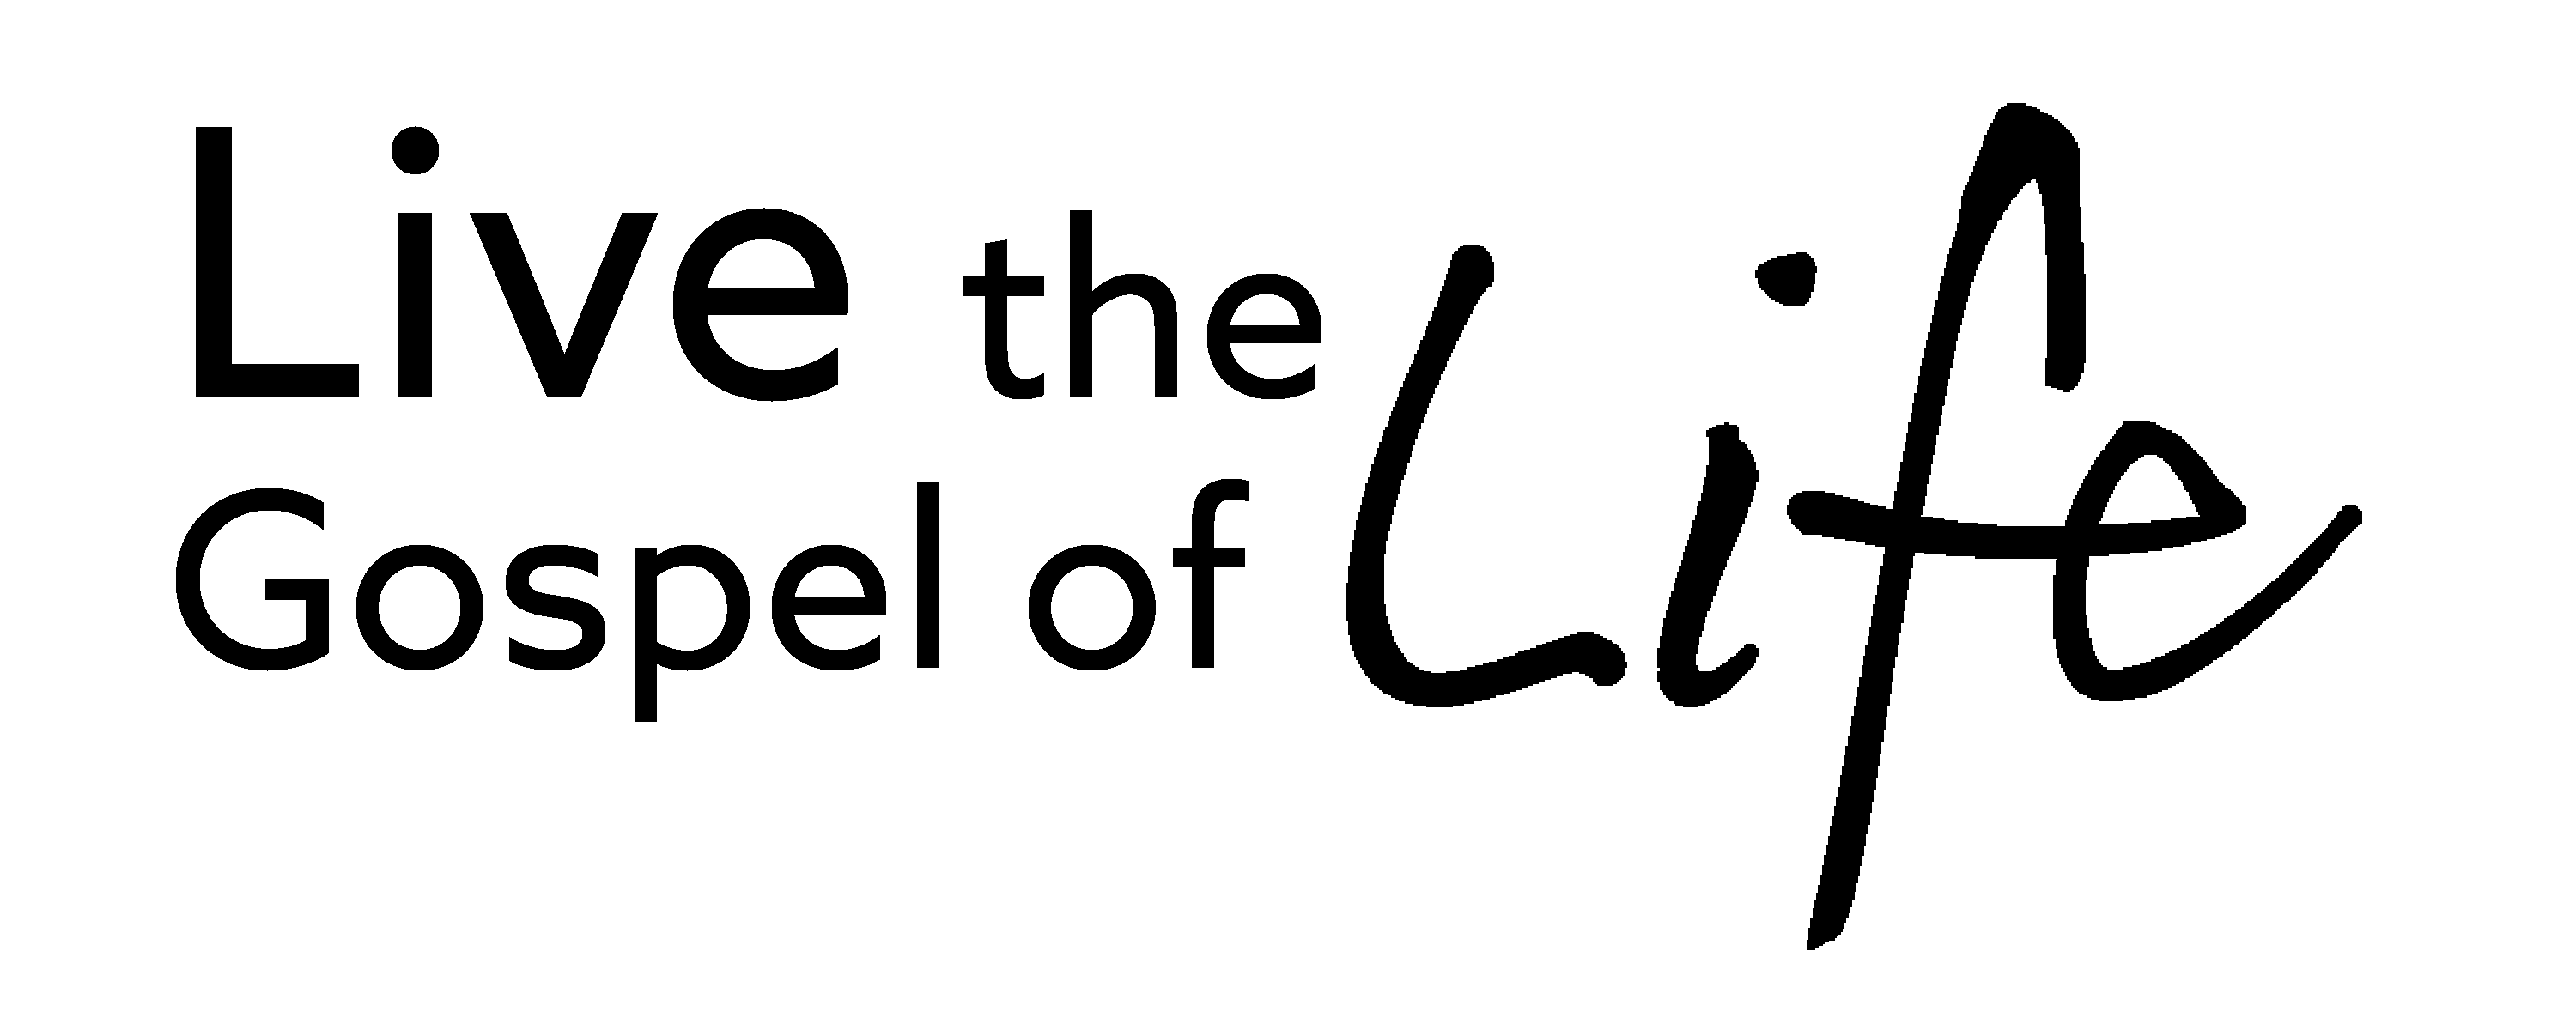 rlp 20 logo black